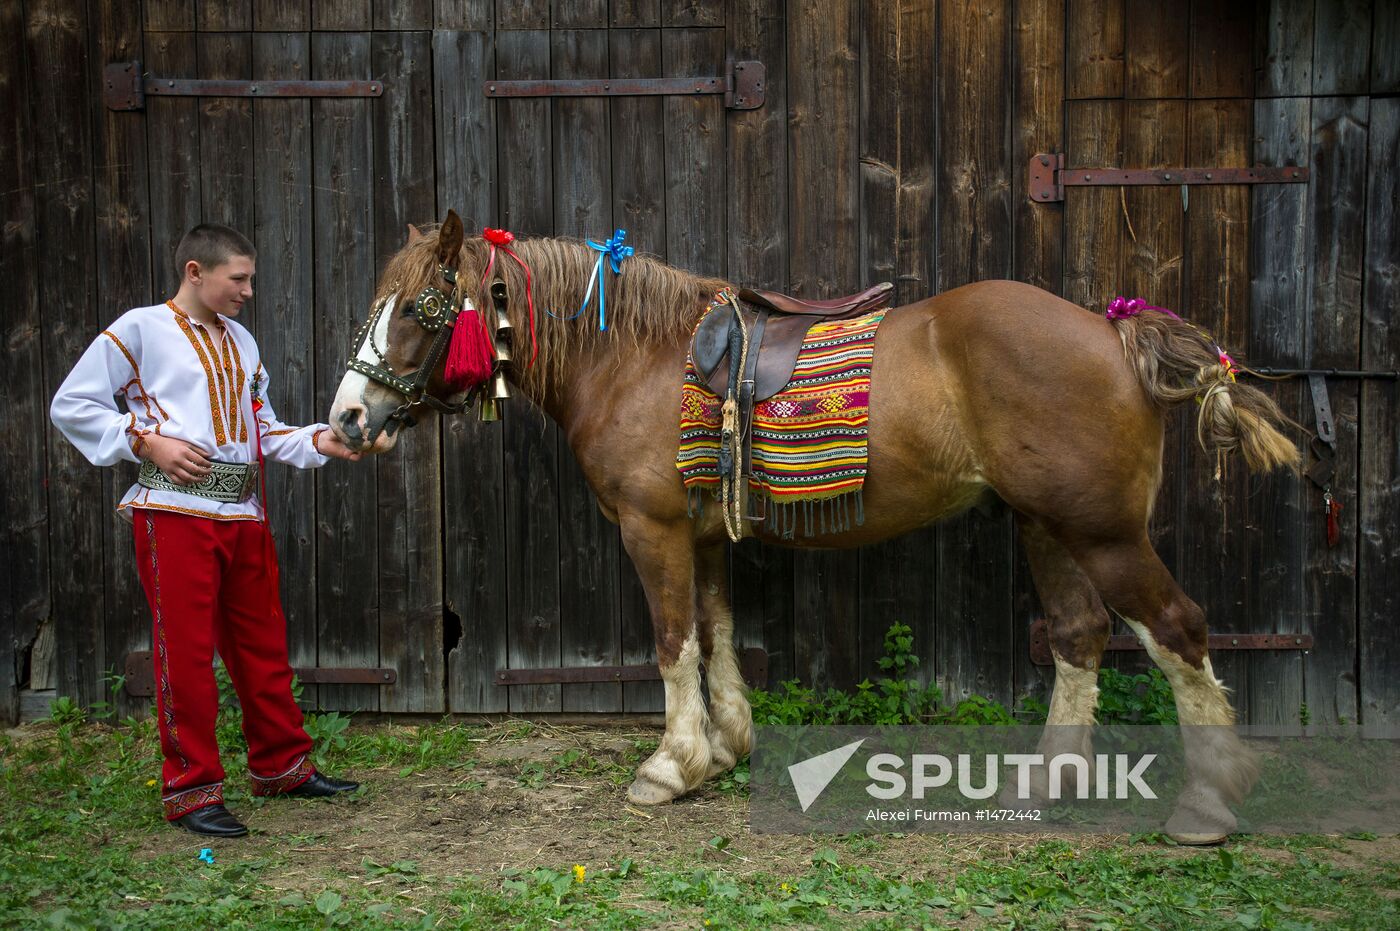 Traditional Hutsul wedding